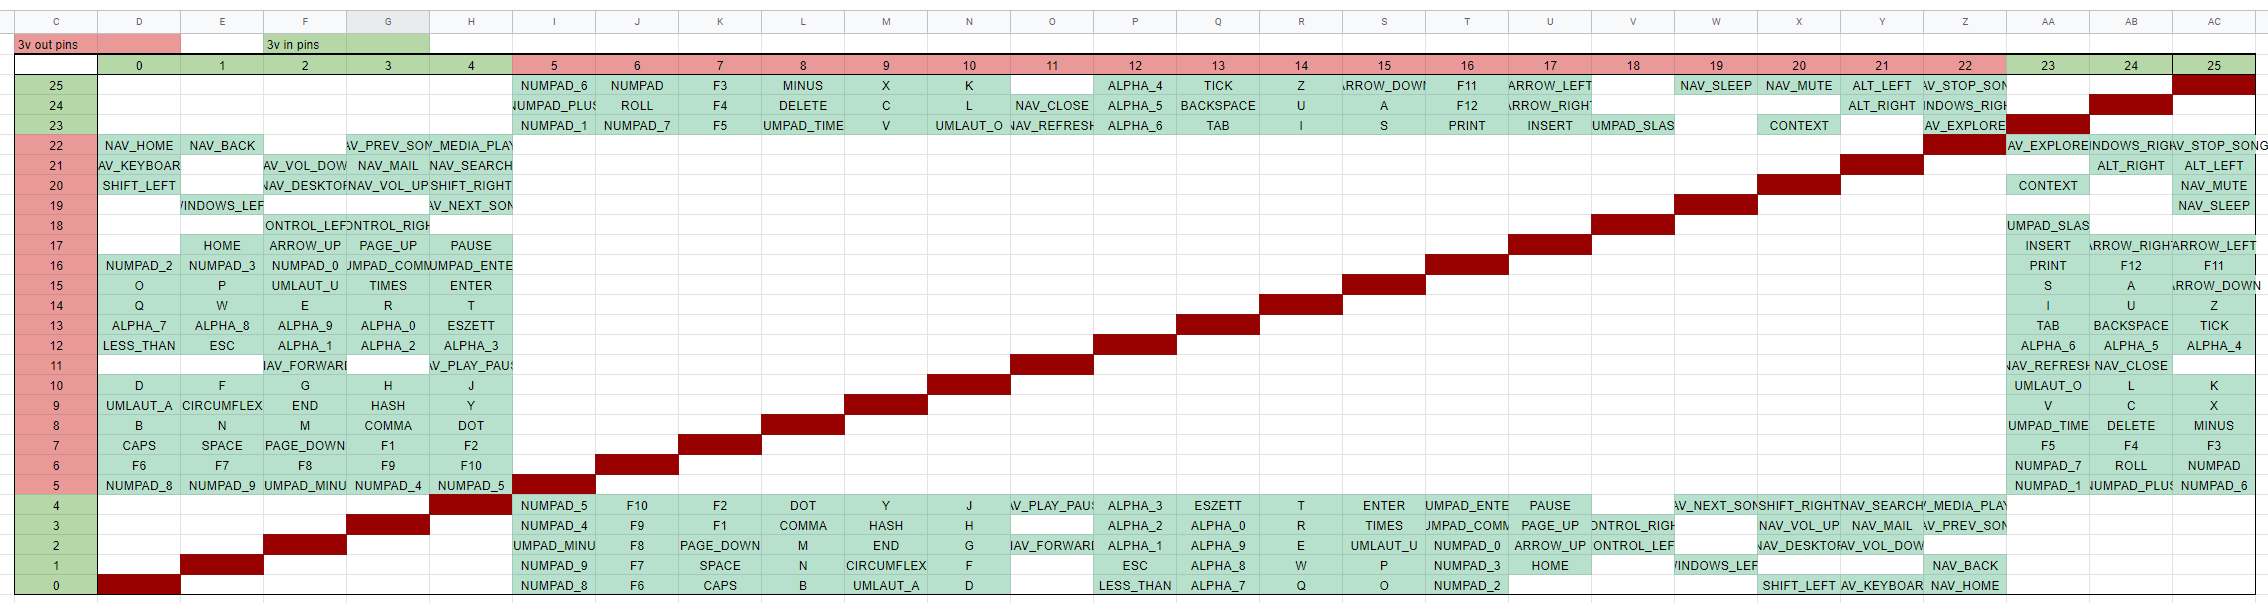 image of the keyboard matrix spreadsheet